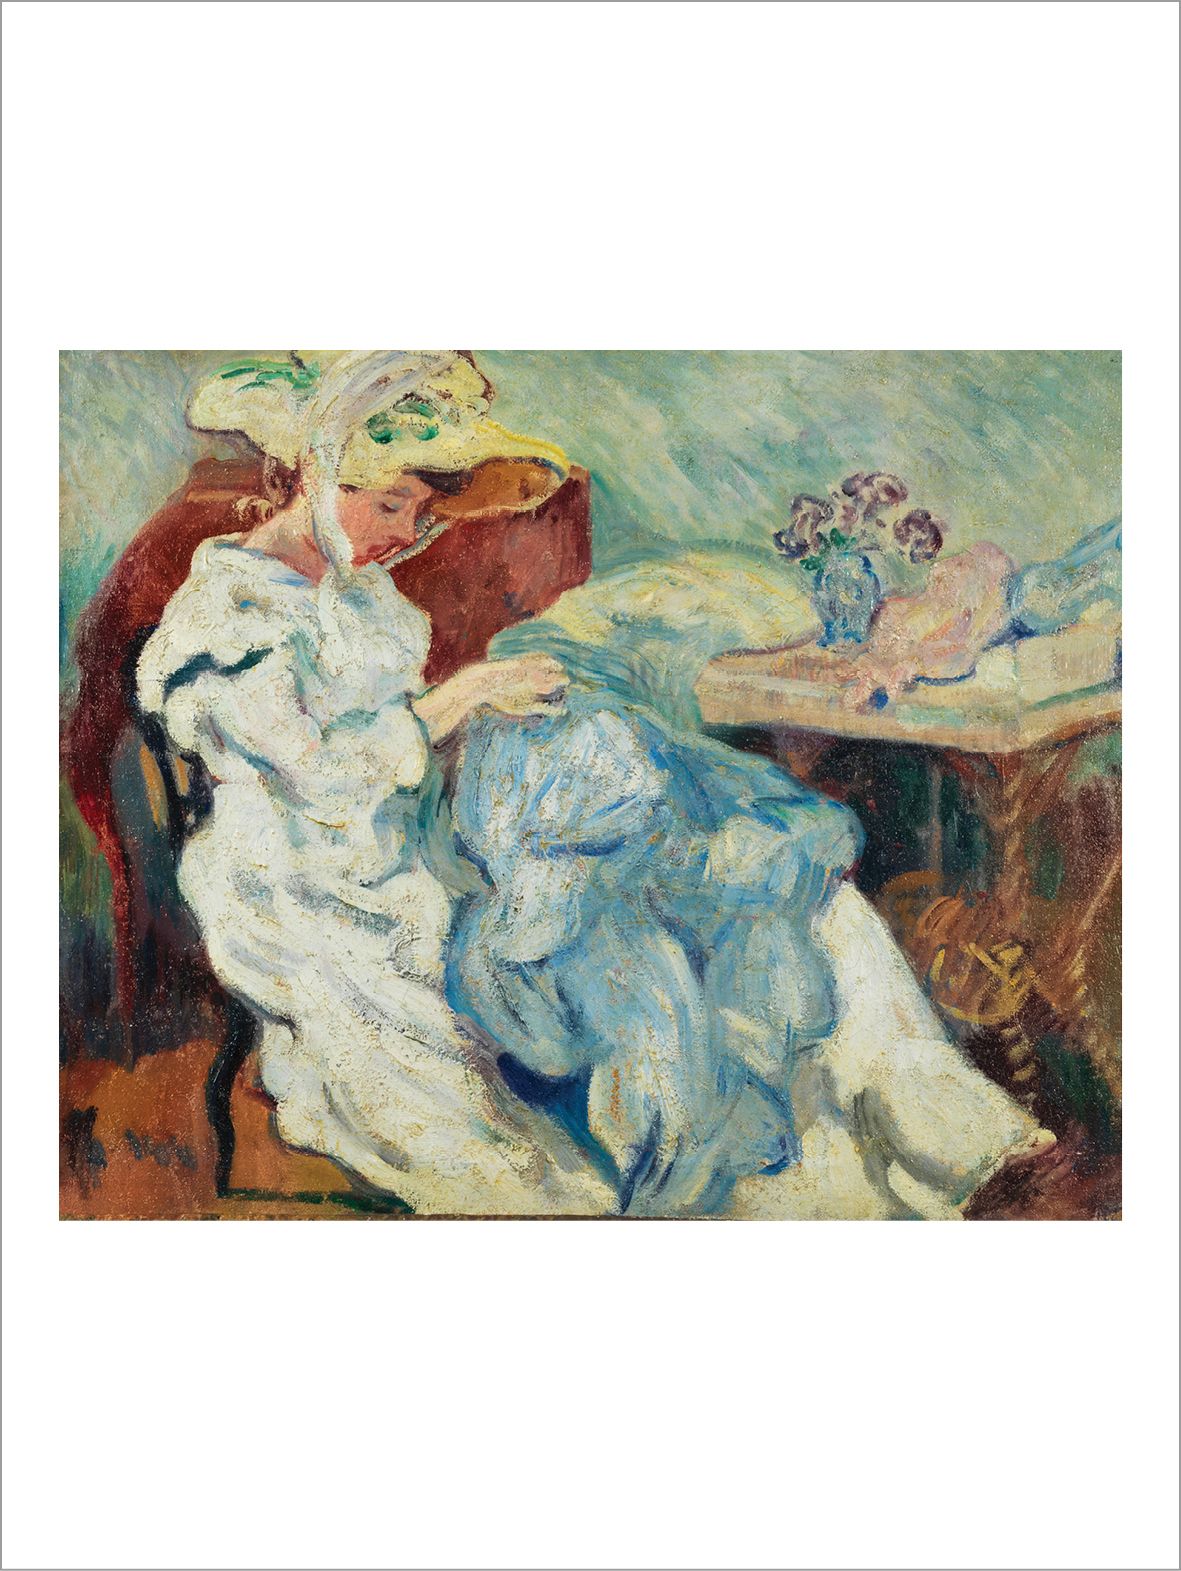 Louis VALTAT (1869-1952) La couture, circa 1902-1903
Oil on canvas.
Oil on canva&hellip;